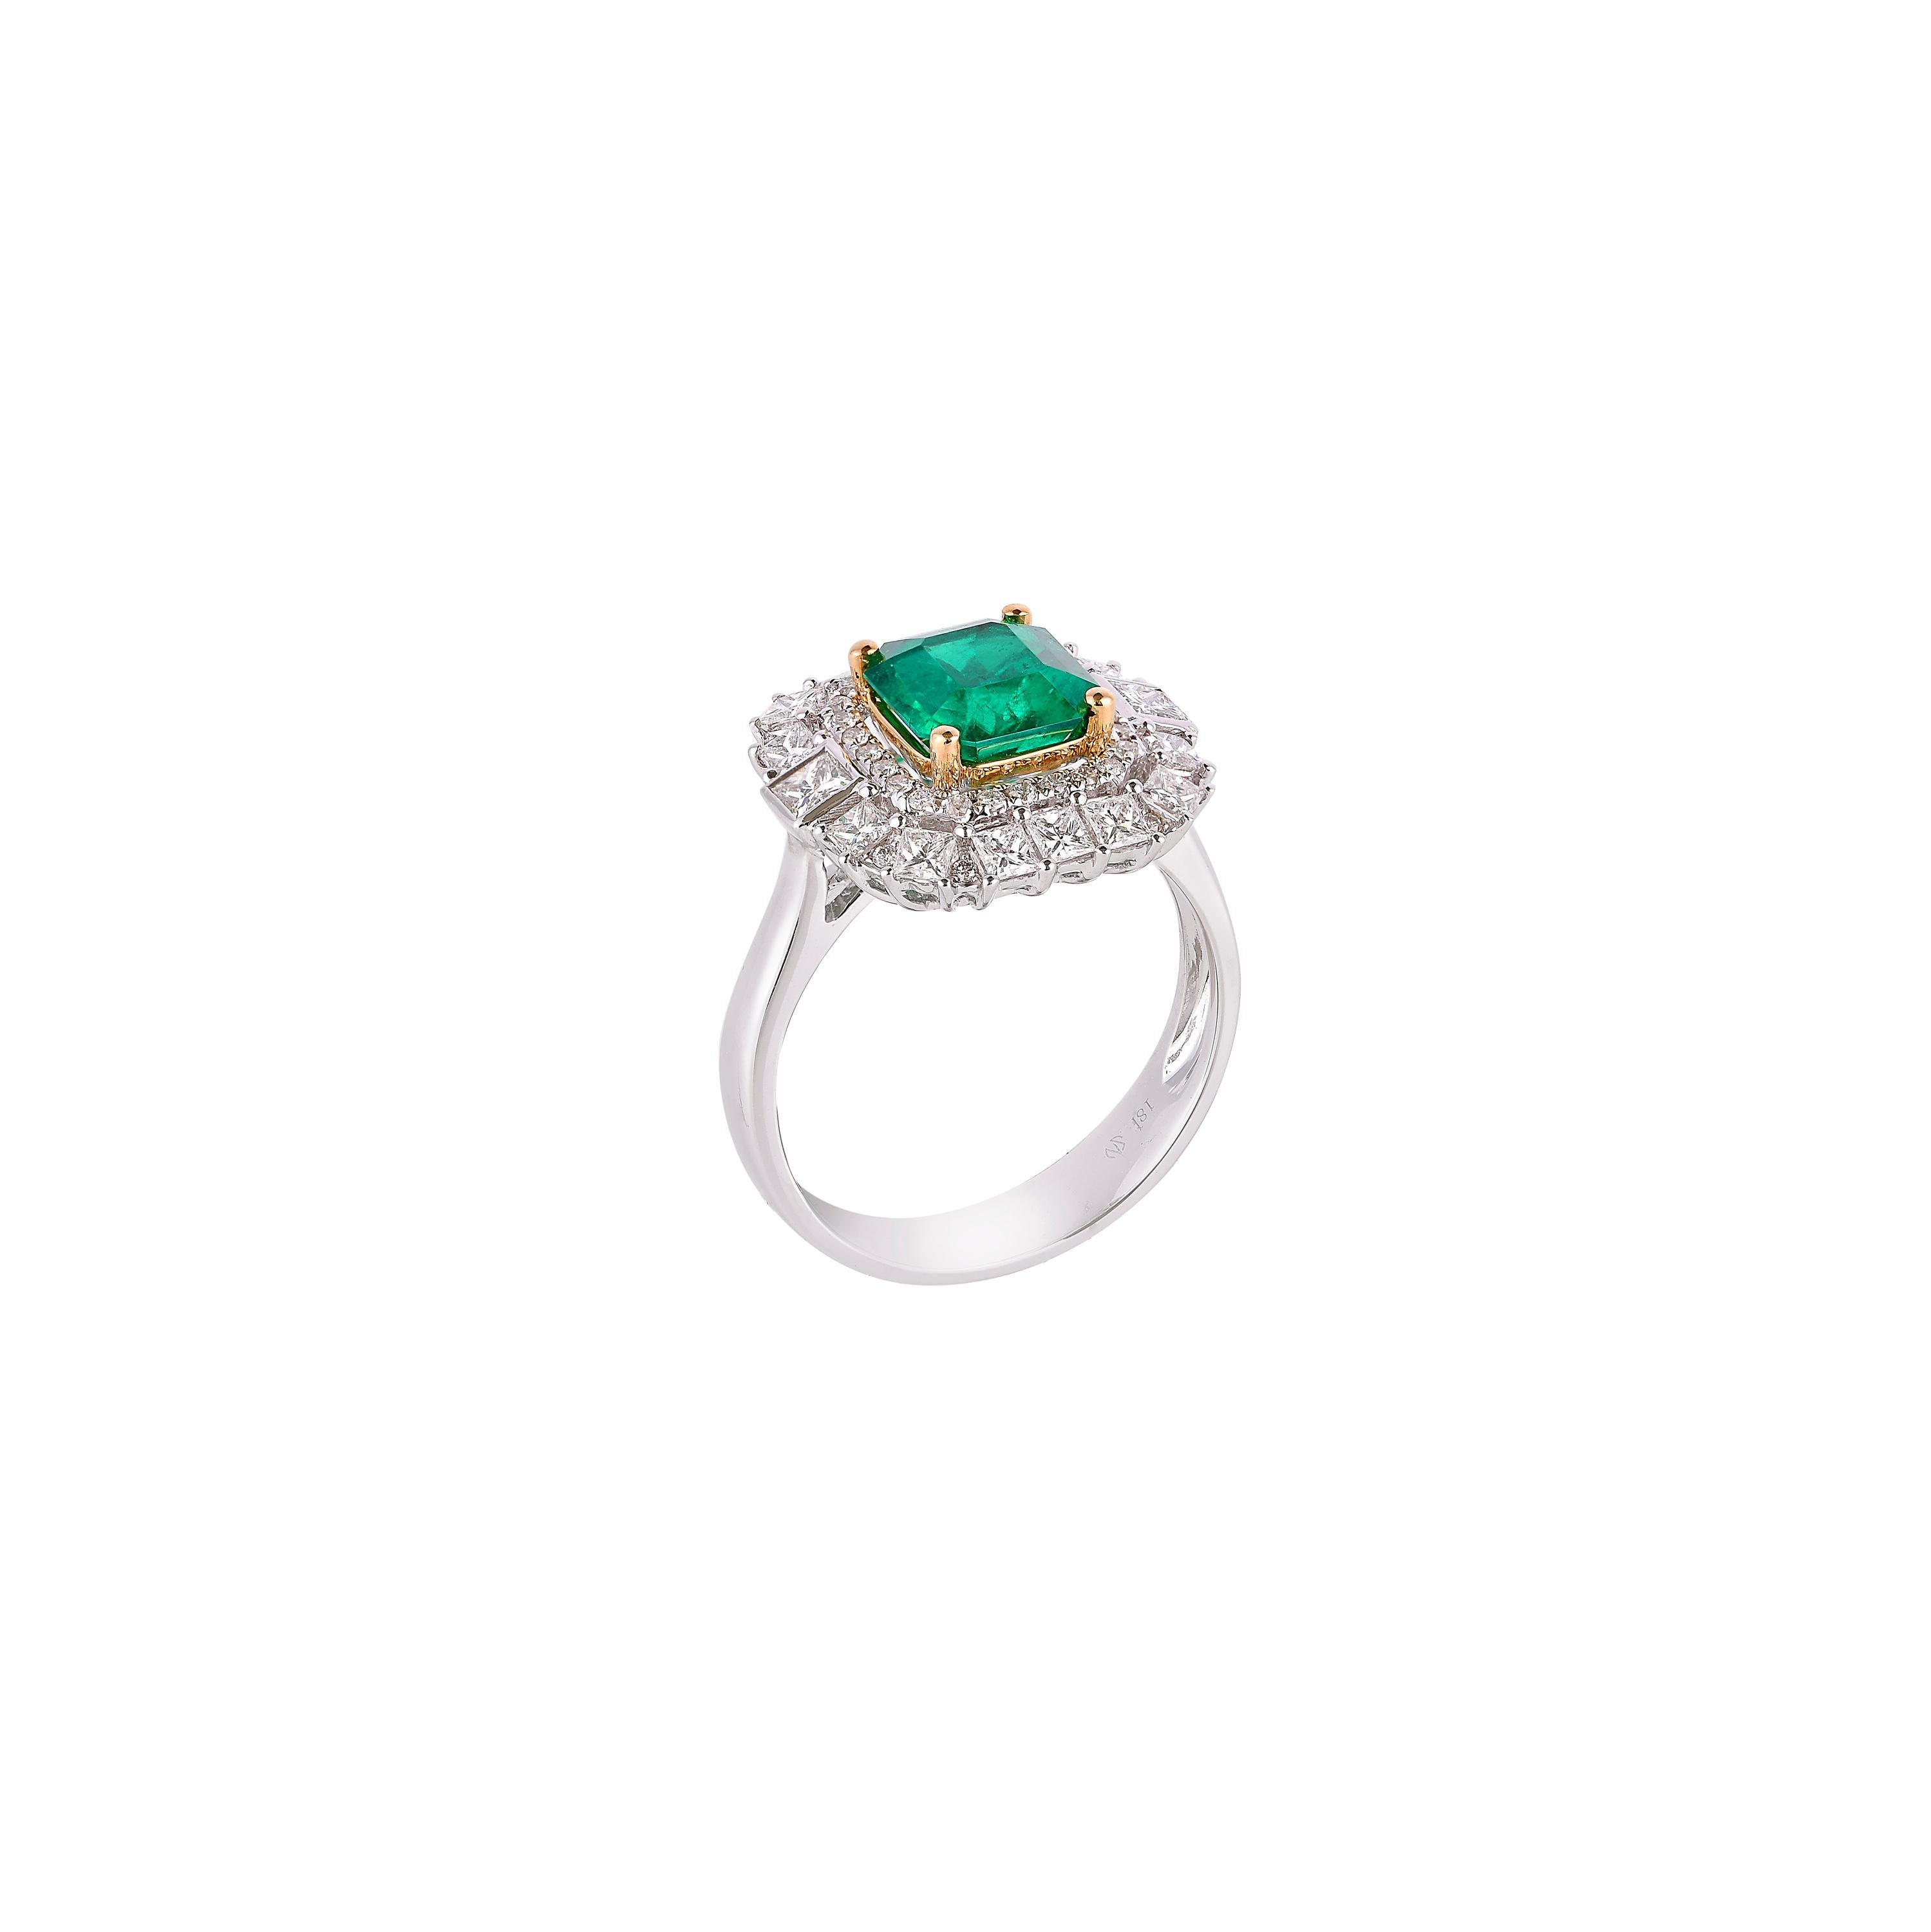 1.7 carat emerald cut diamond ring